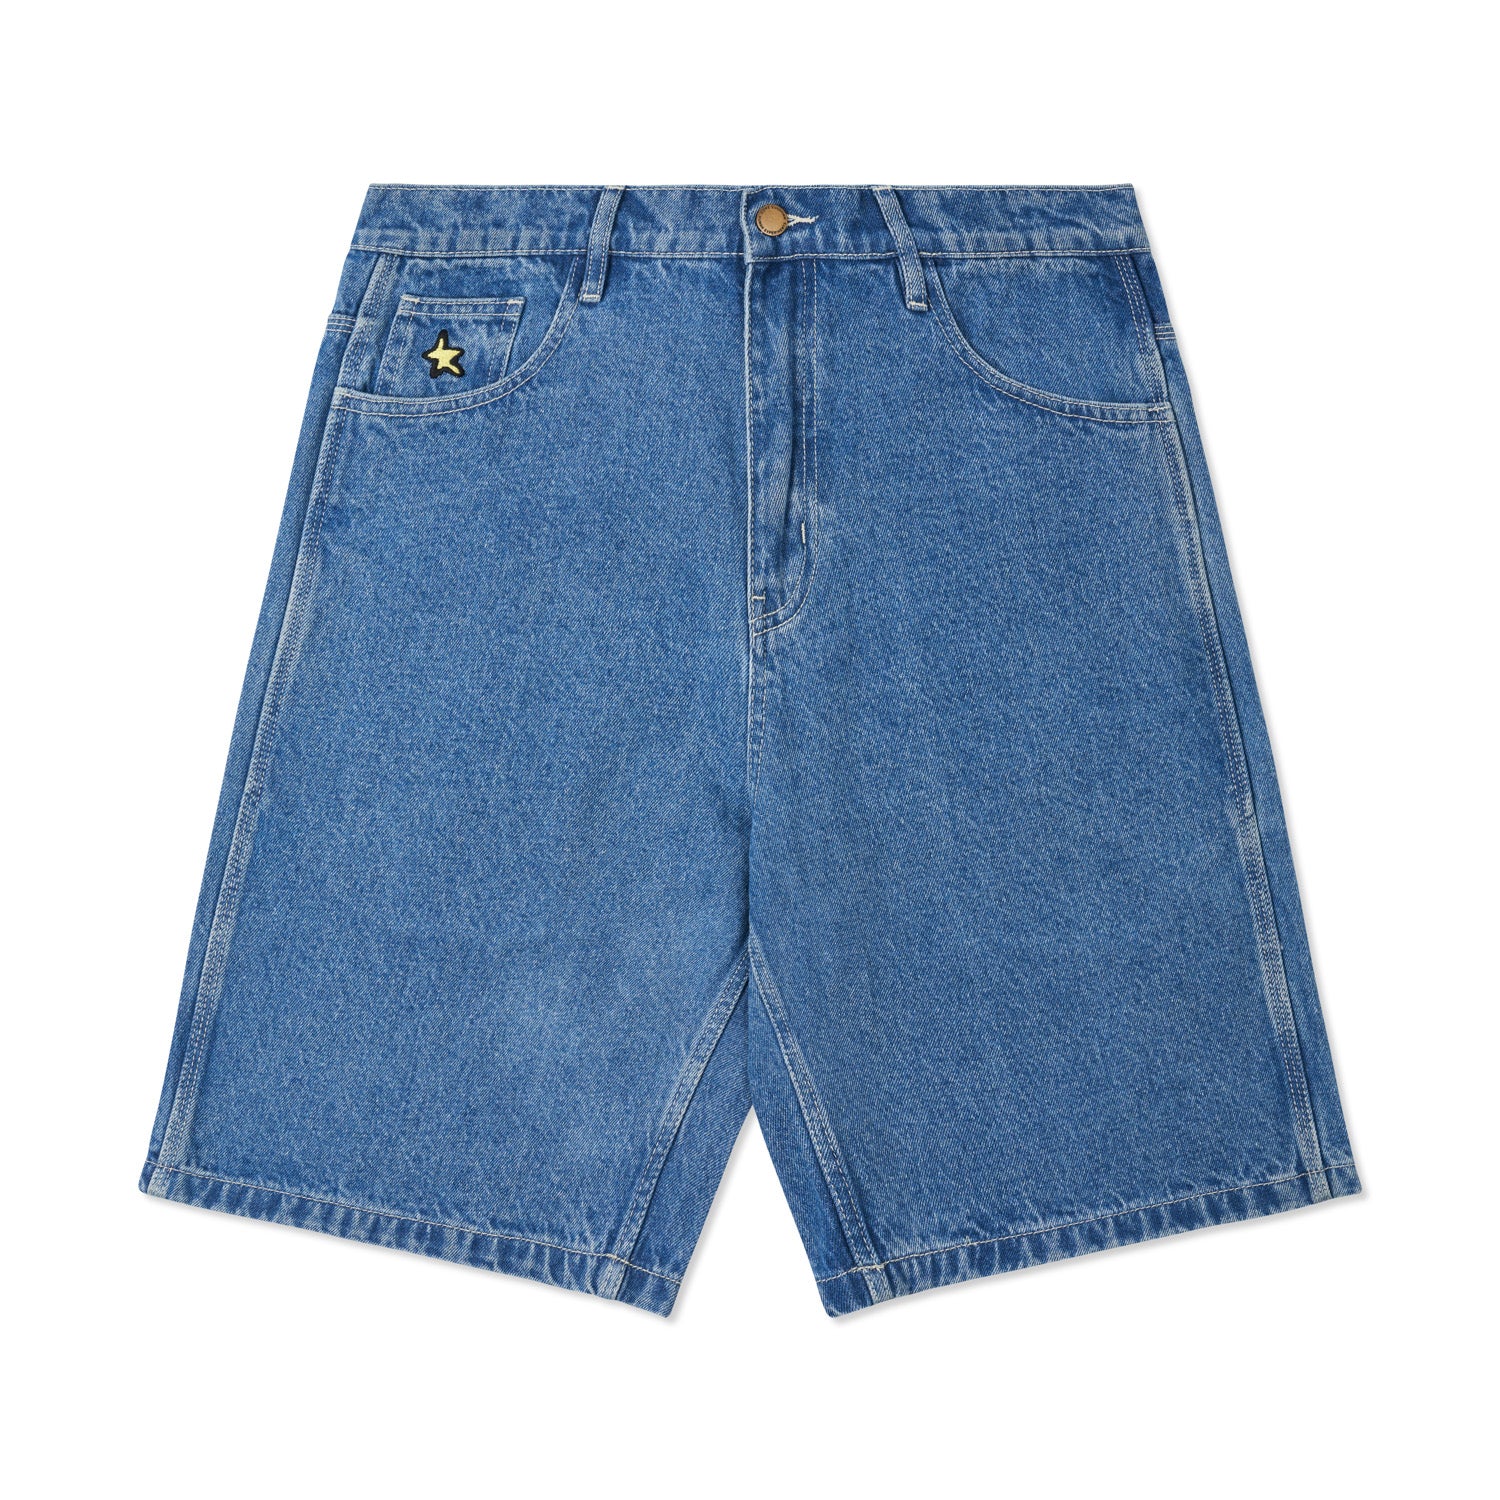 OJCGM Denim Shorts, Washed Blue